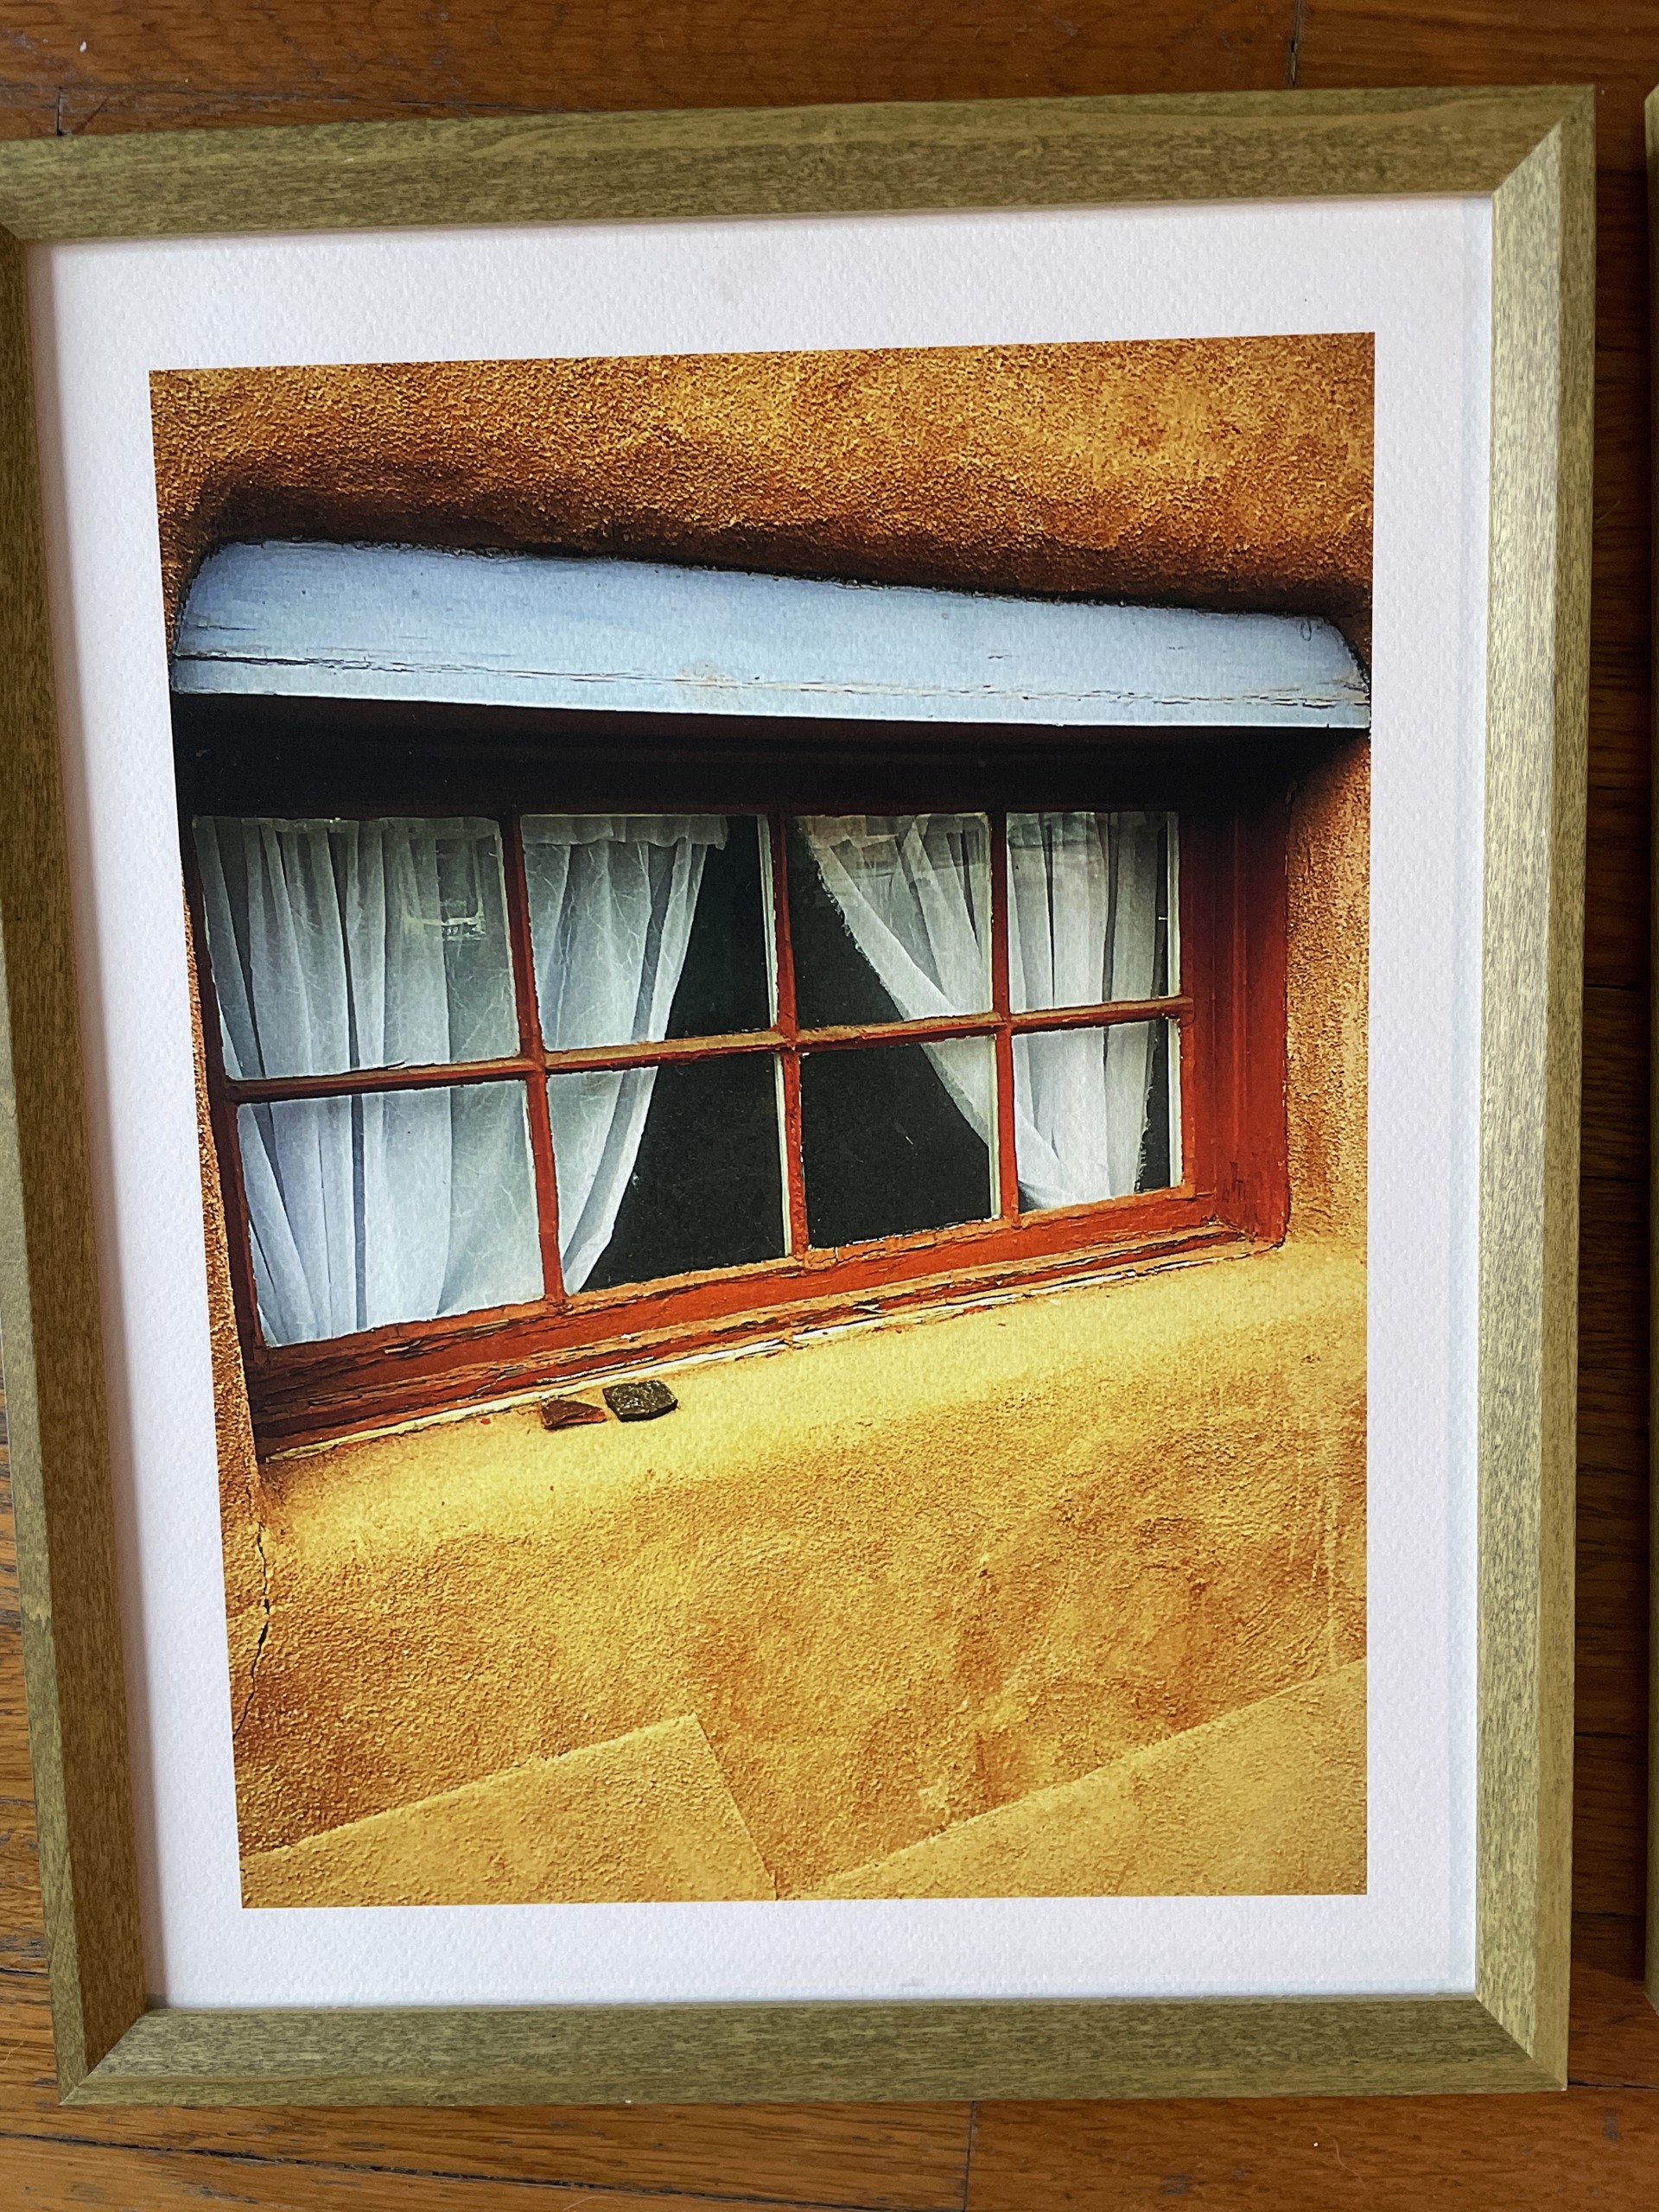 Windows and Doors 1, Santa Fe, NM by Angela Kent